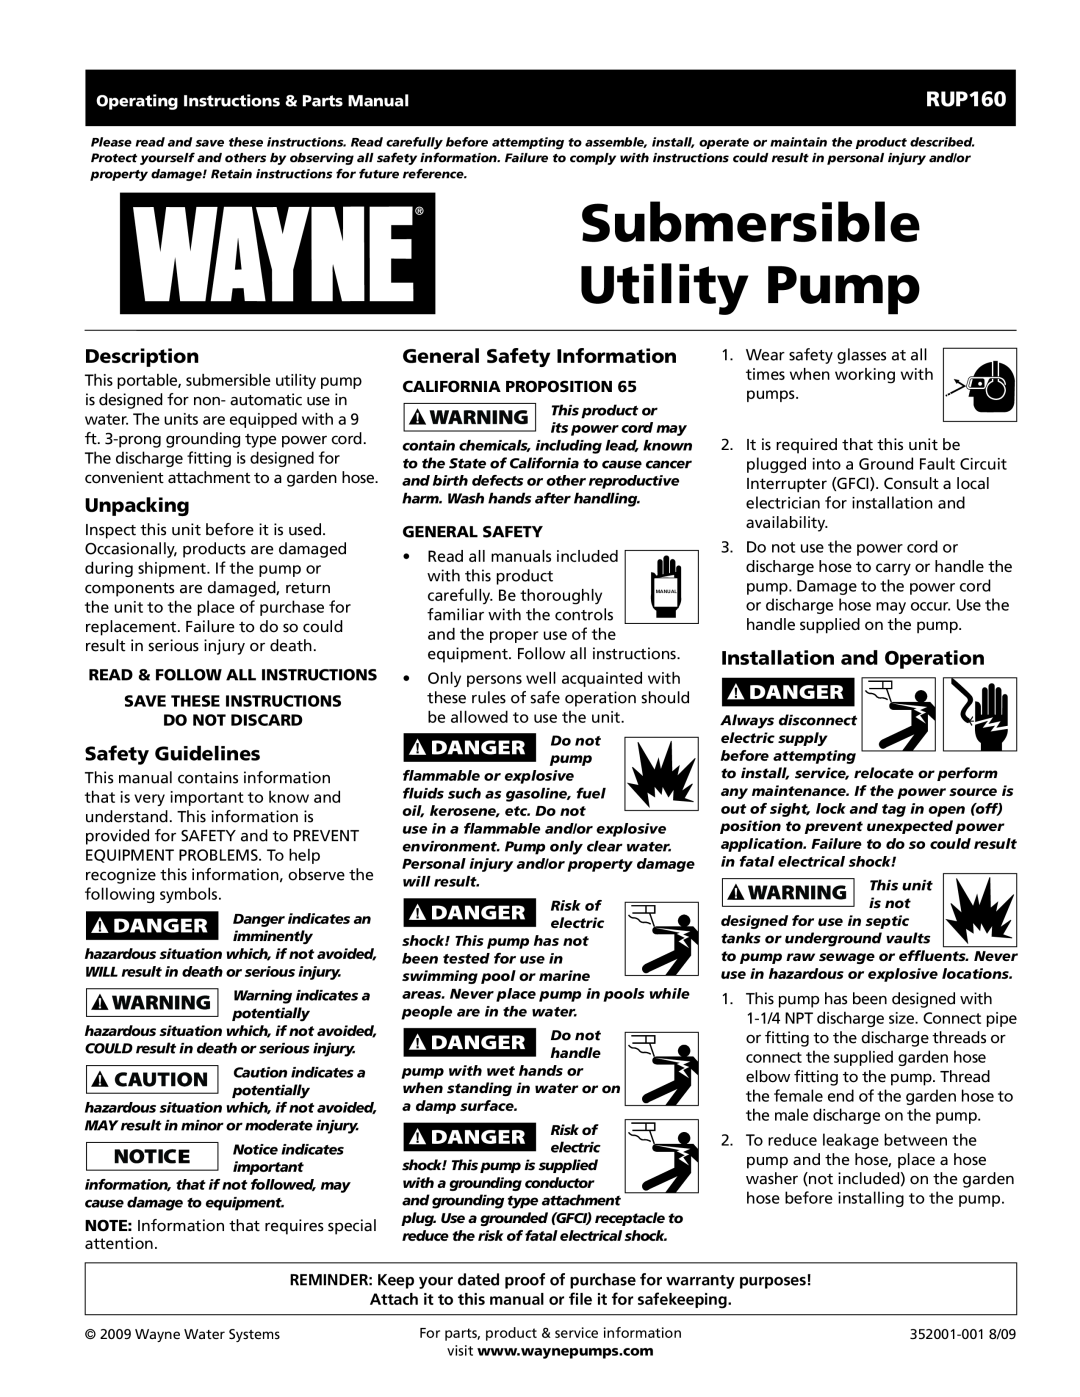 Wayne 352001-001 warranty Description, Unpacking, Safety Guidelines, General Safety Information, California Proposition 